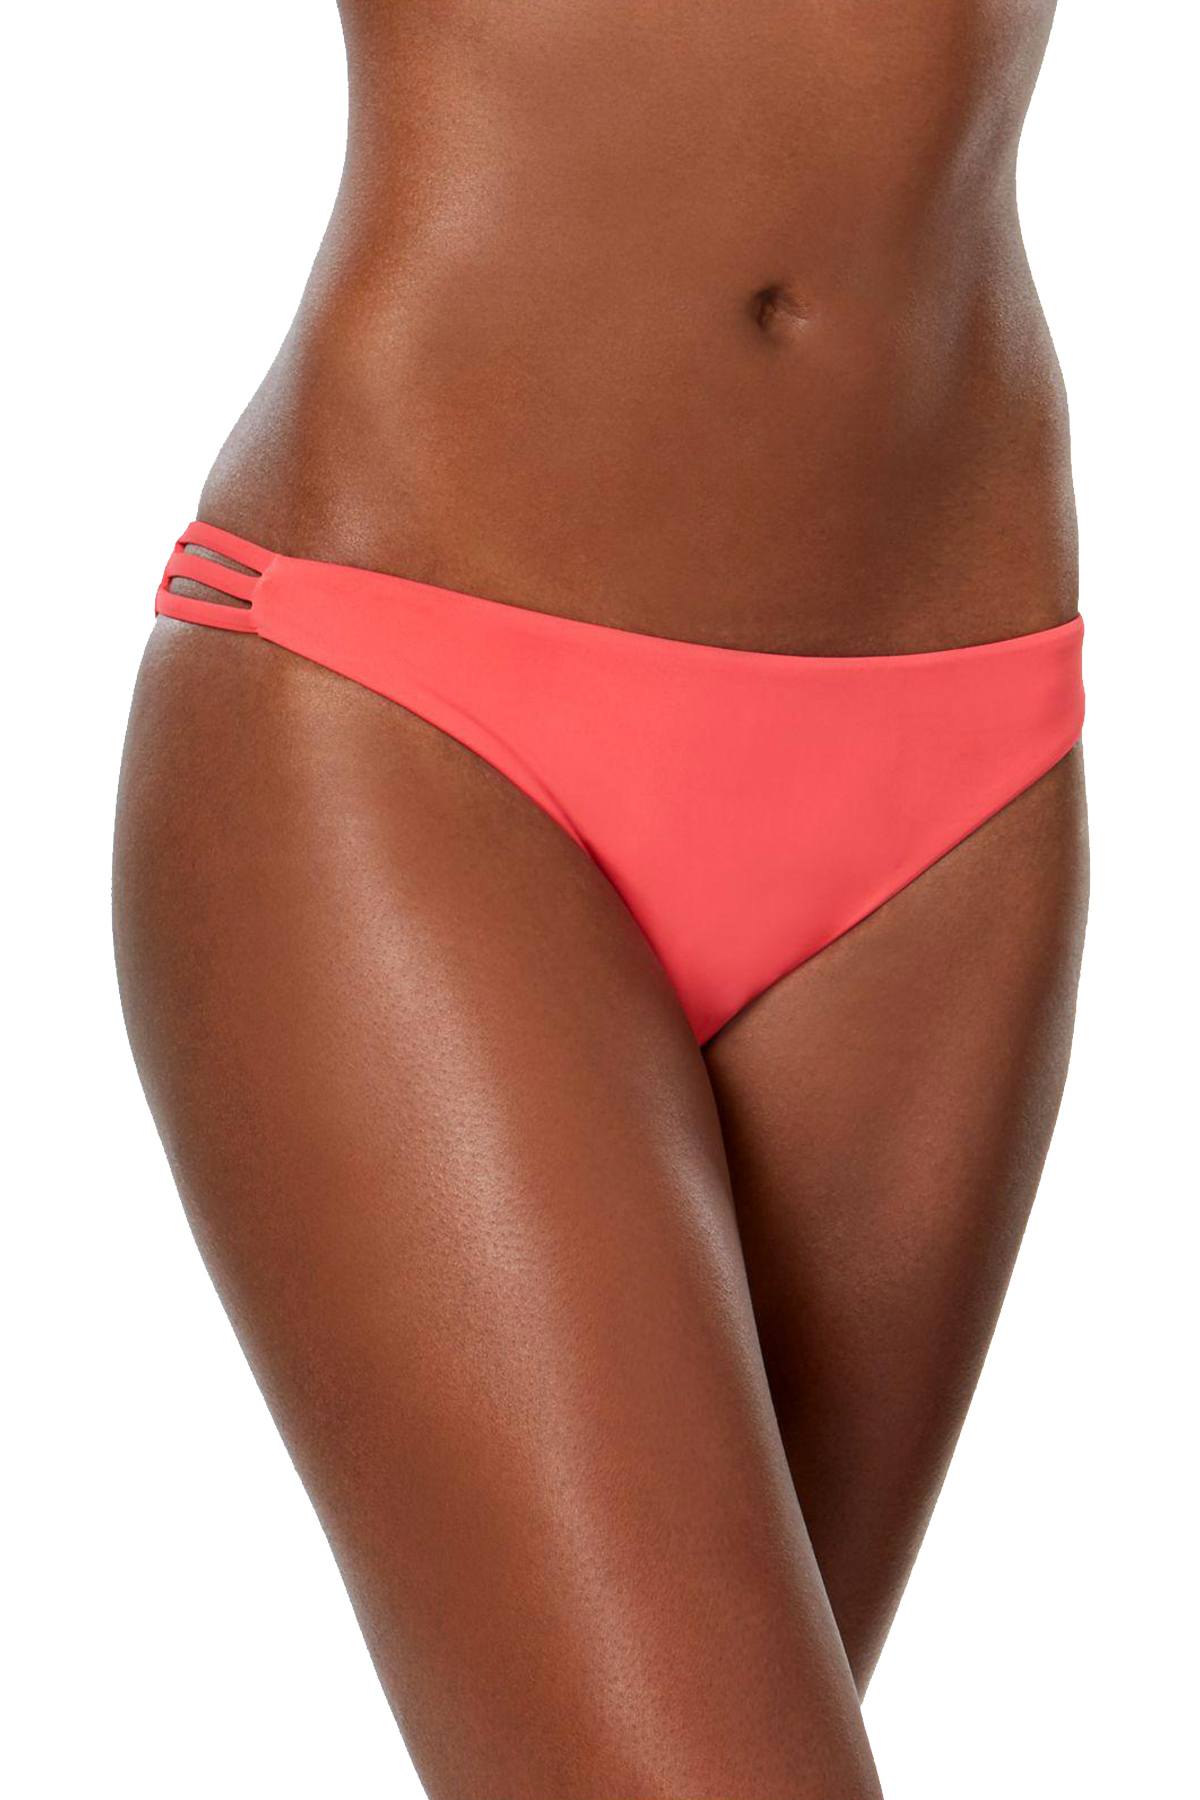 Roxy Softly Love Cheeky Bikini Bottom in Coral Pink